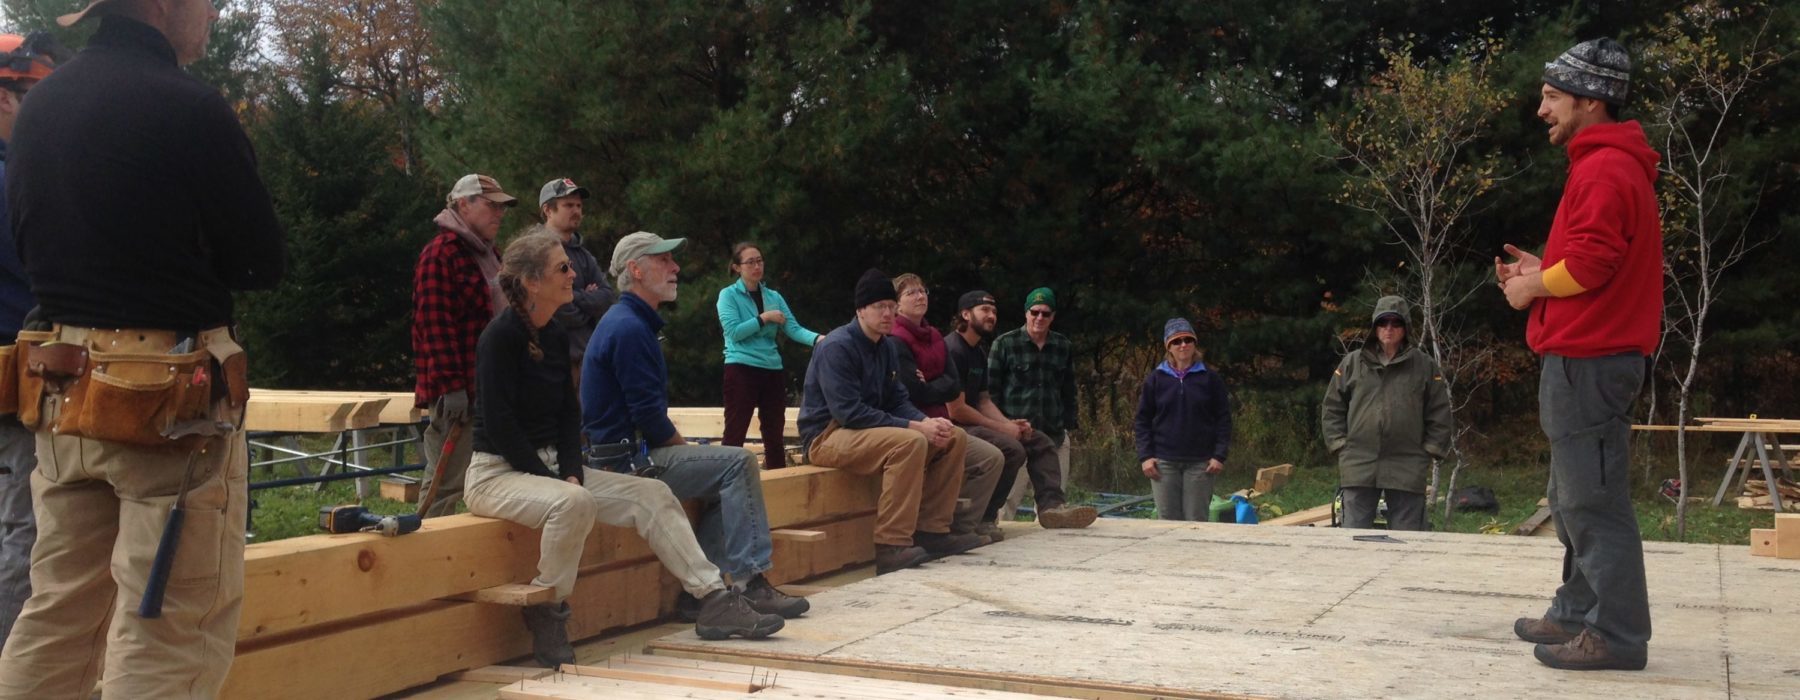 Volunteers helping to build Nulhegan Hut in Bloomfield, Vermont.